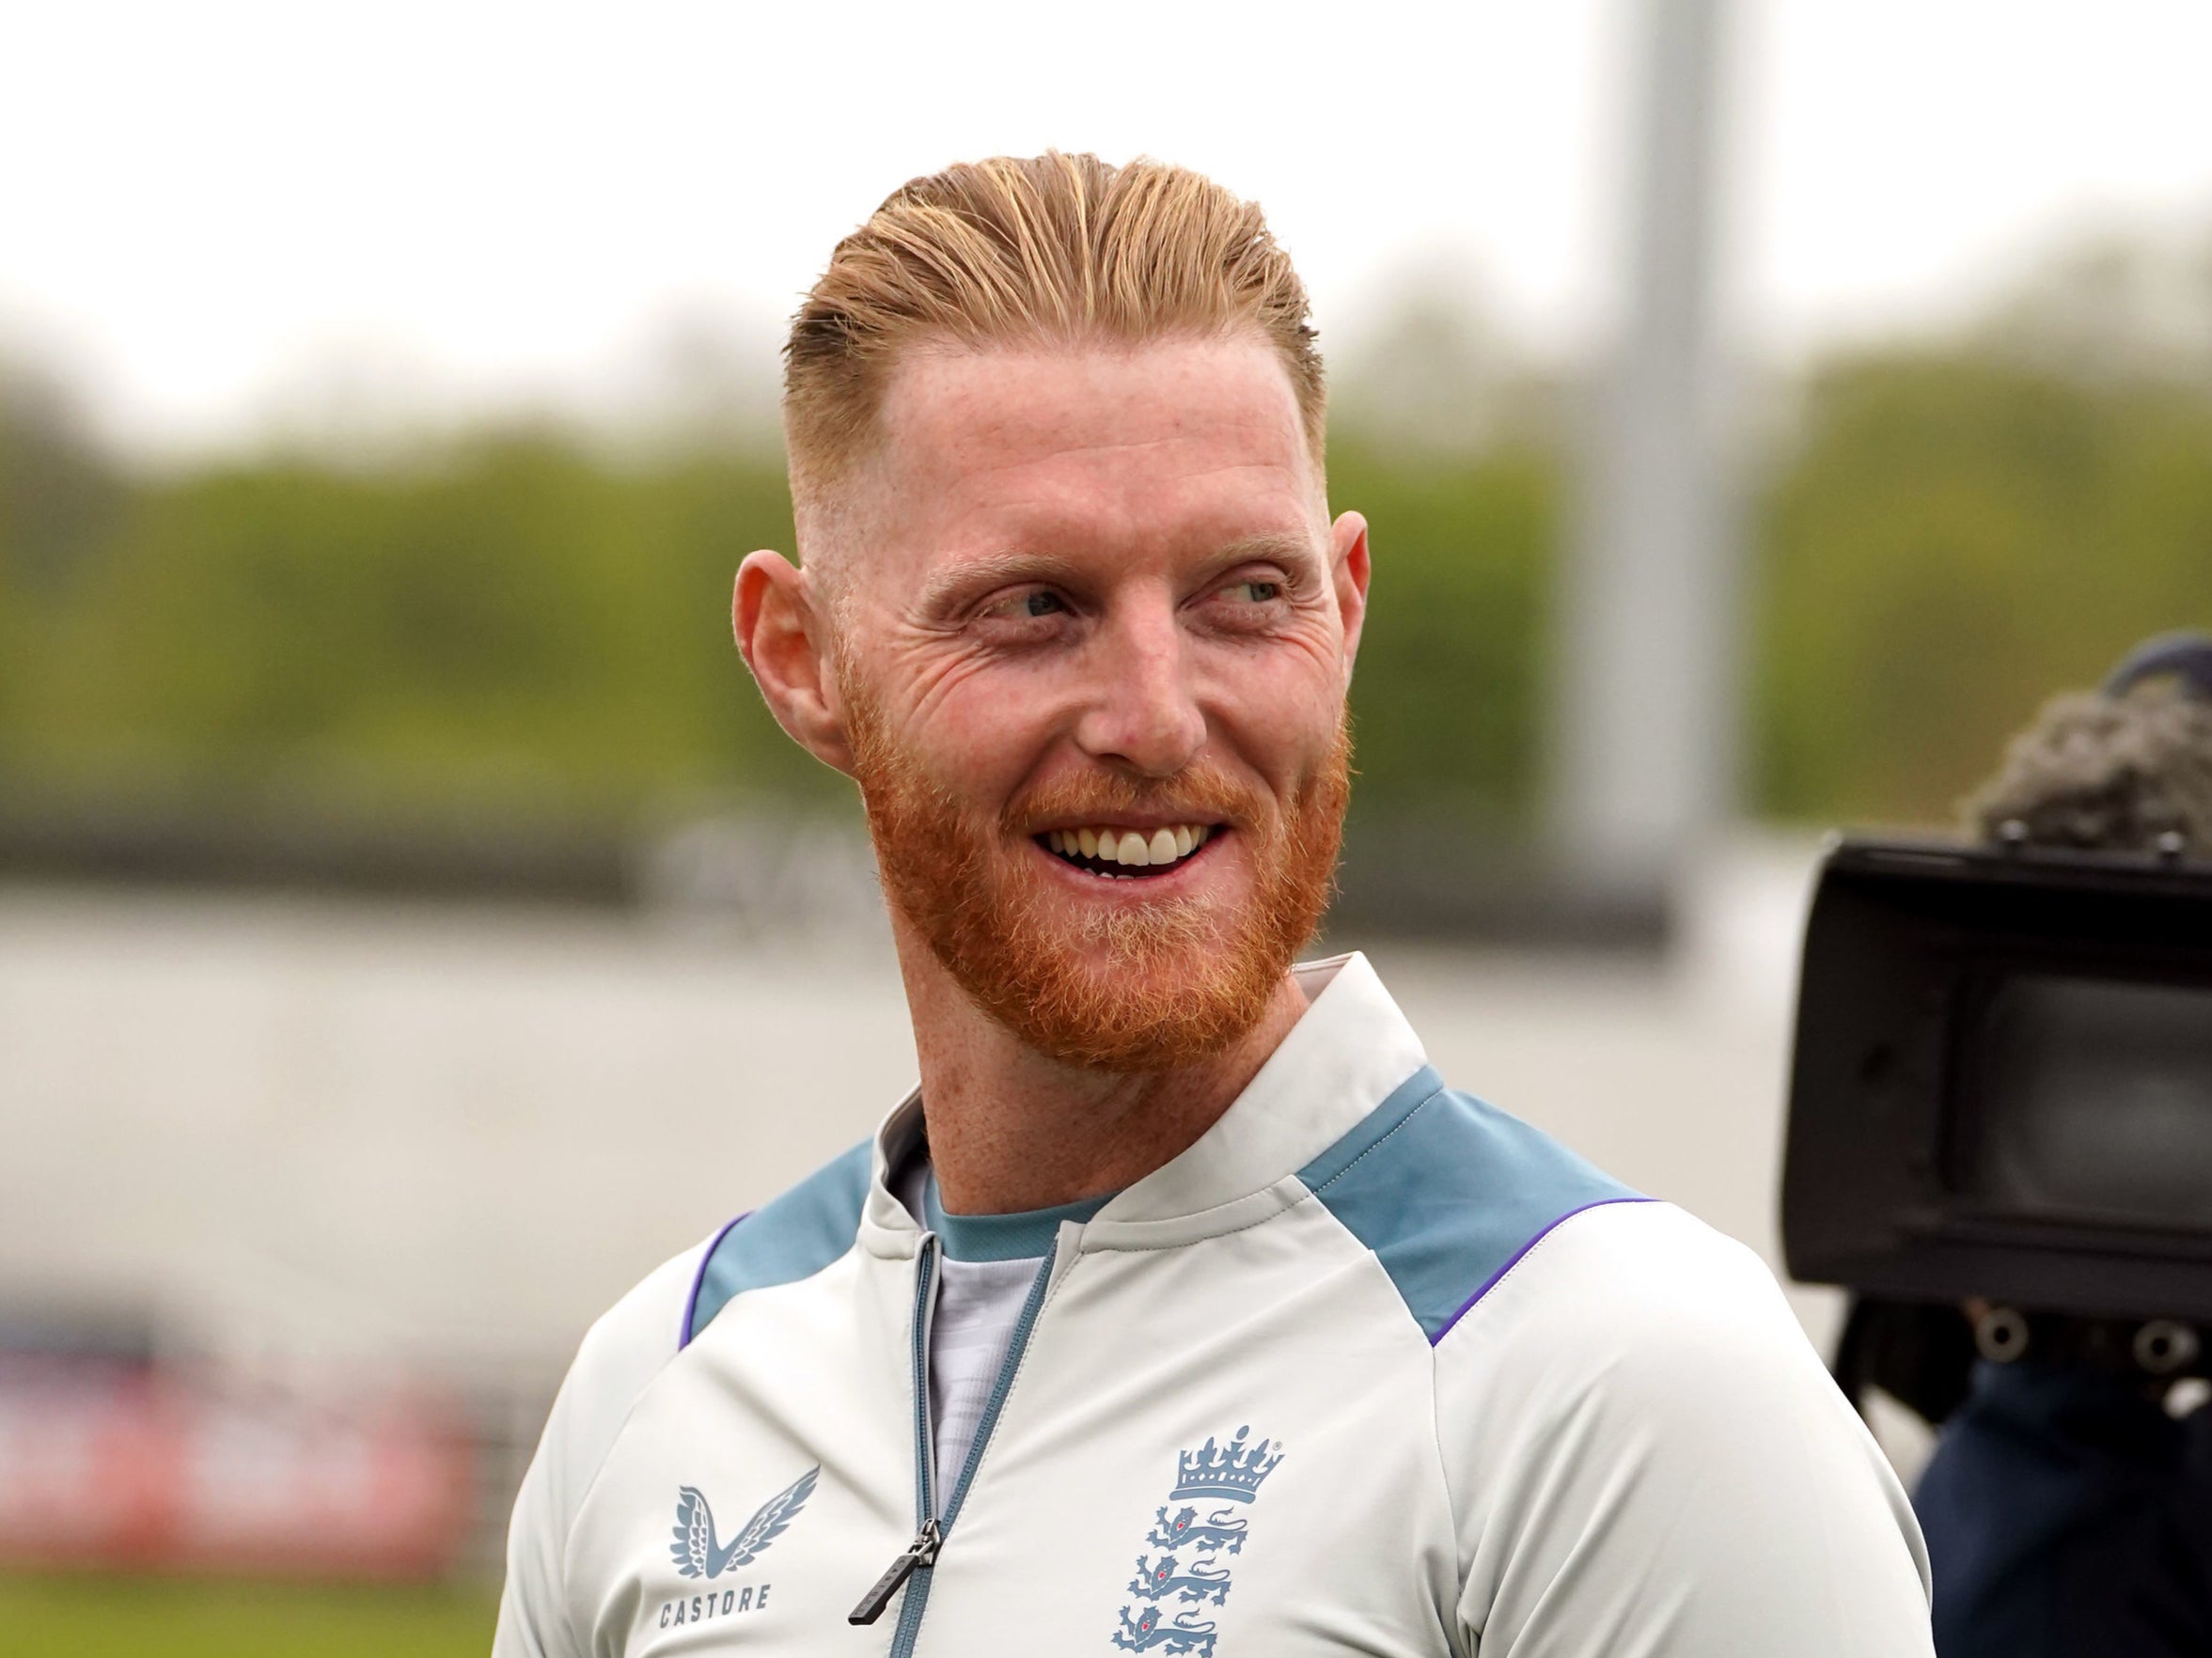 Ben Stokes succeeds Joe Root as England Test captain